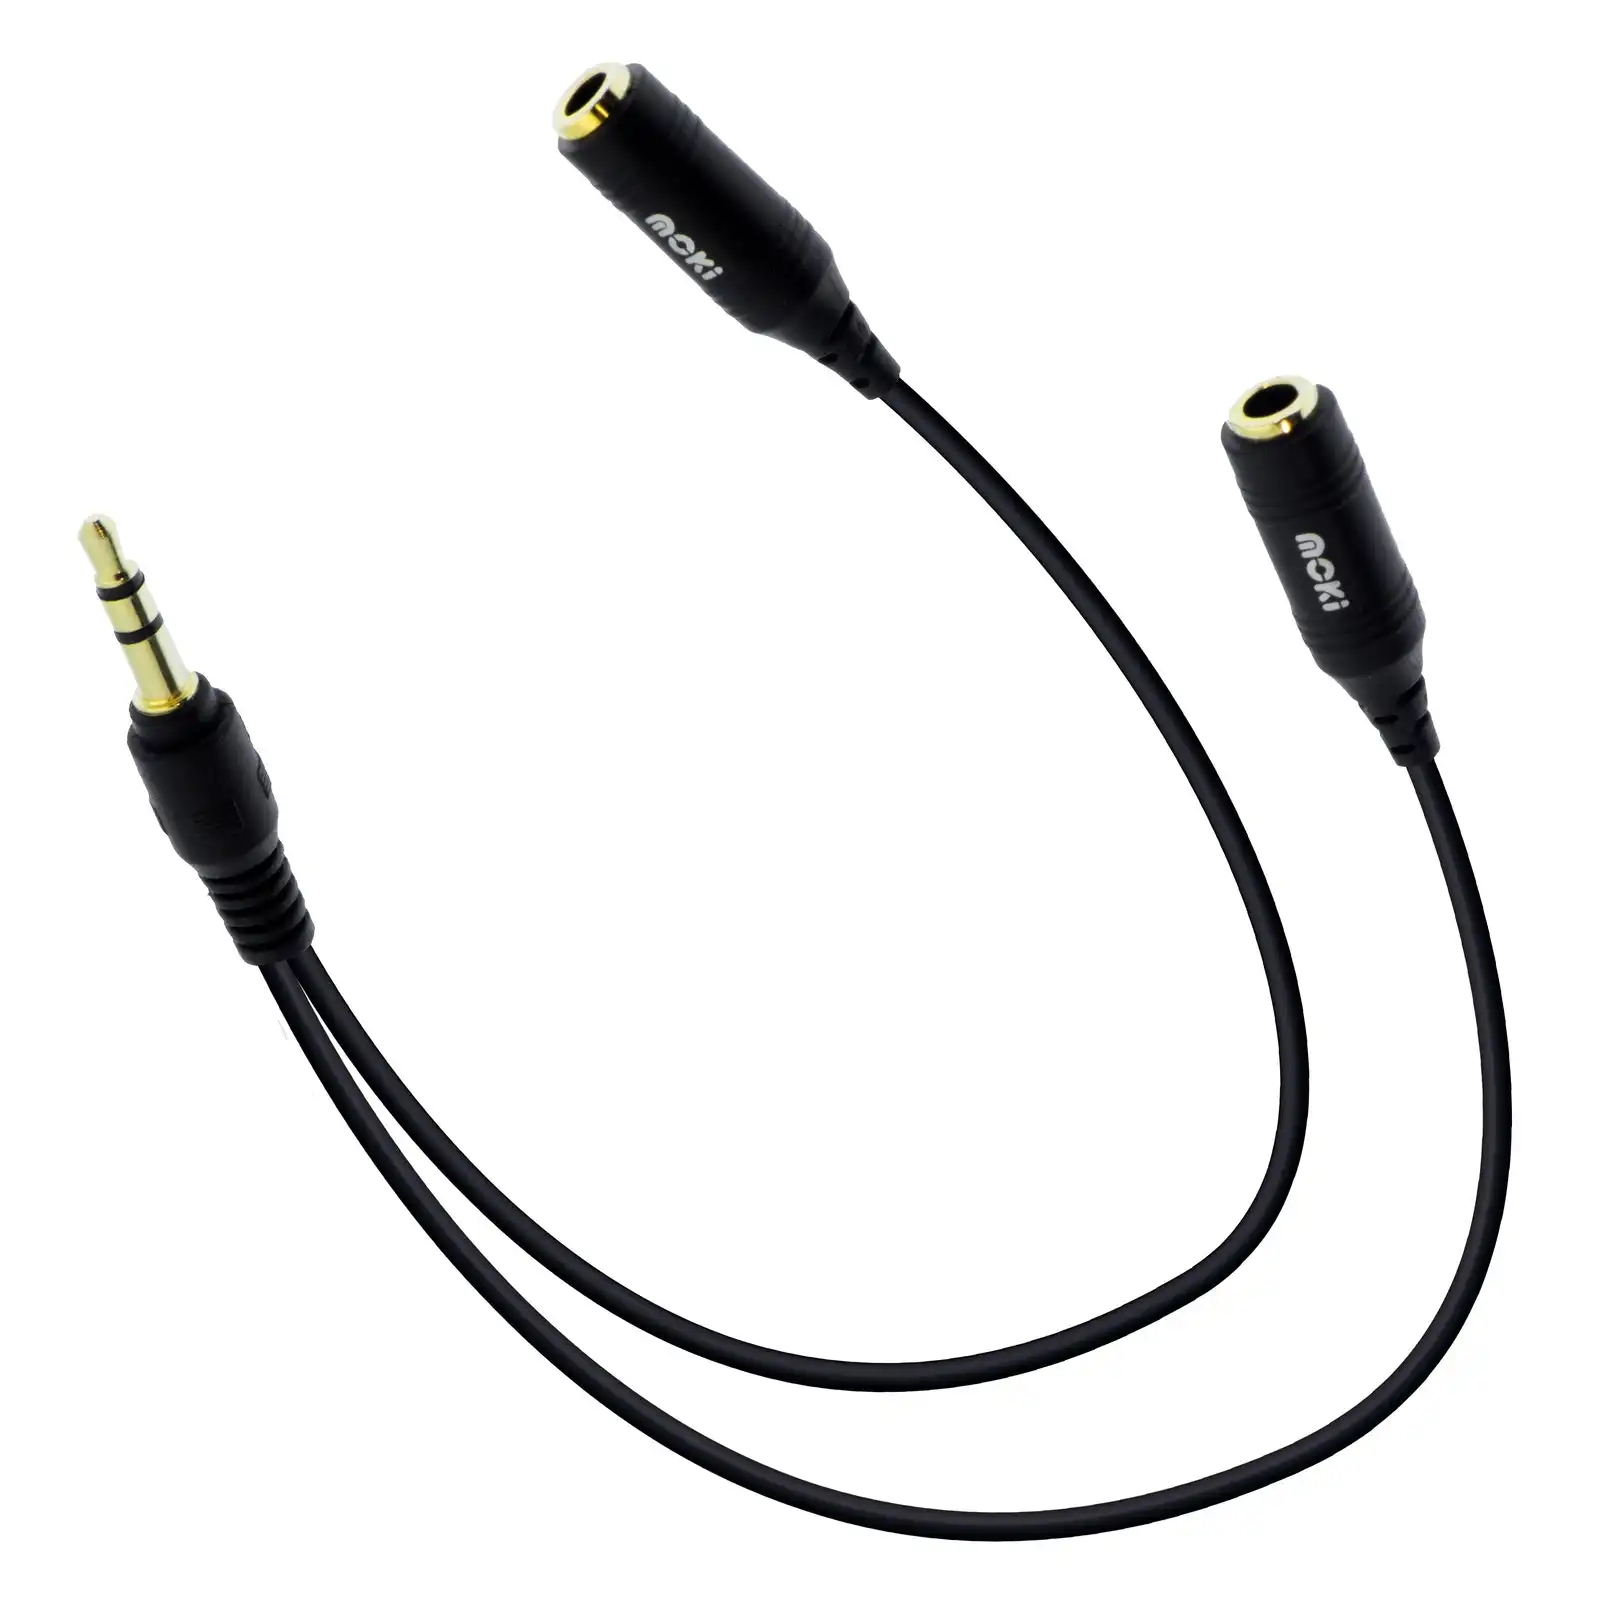 Moki 3.5mm Splitter 15cm Cable for Smartphones/Tablets/Headphones/Portable DVD